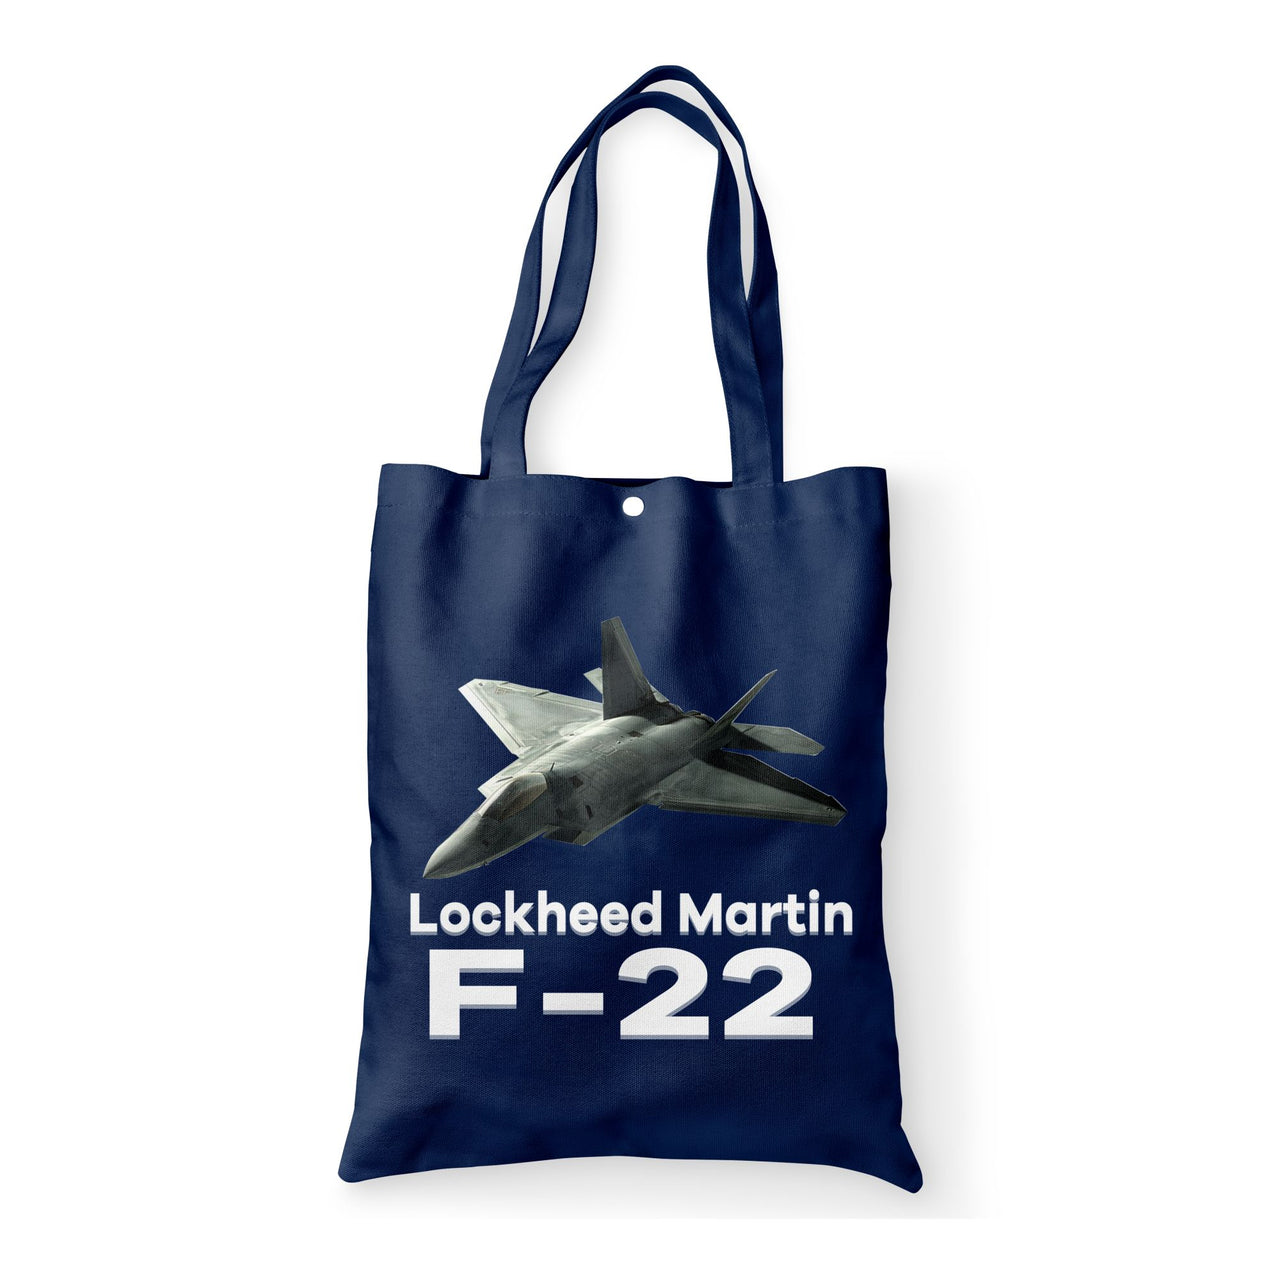 The Lockheed Martin F22 Designed Tote Bags